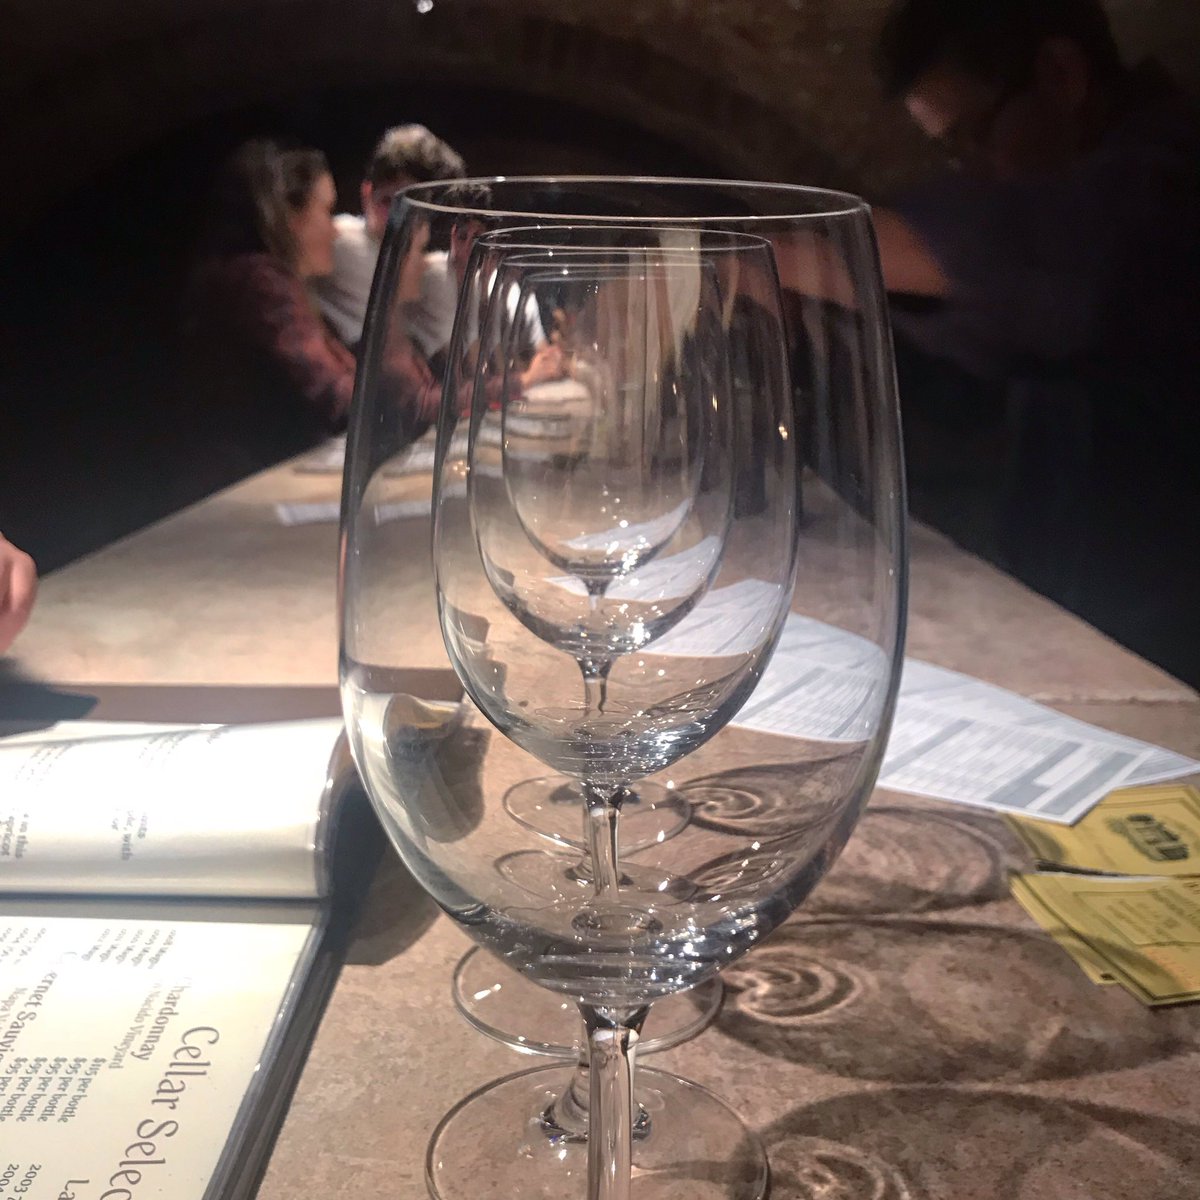 Dreaming of #Napa 🍷
.
.
#napavalley #castellodiamorosa #vineyard